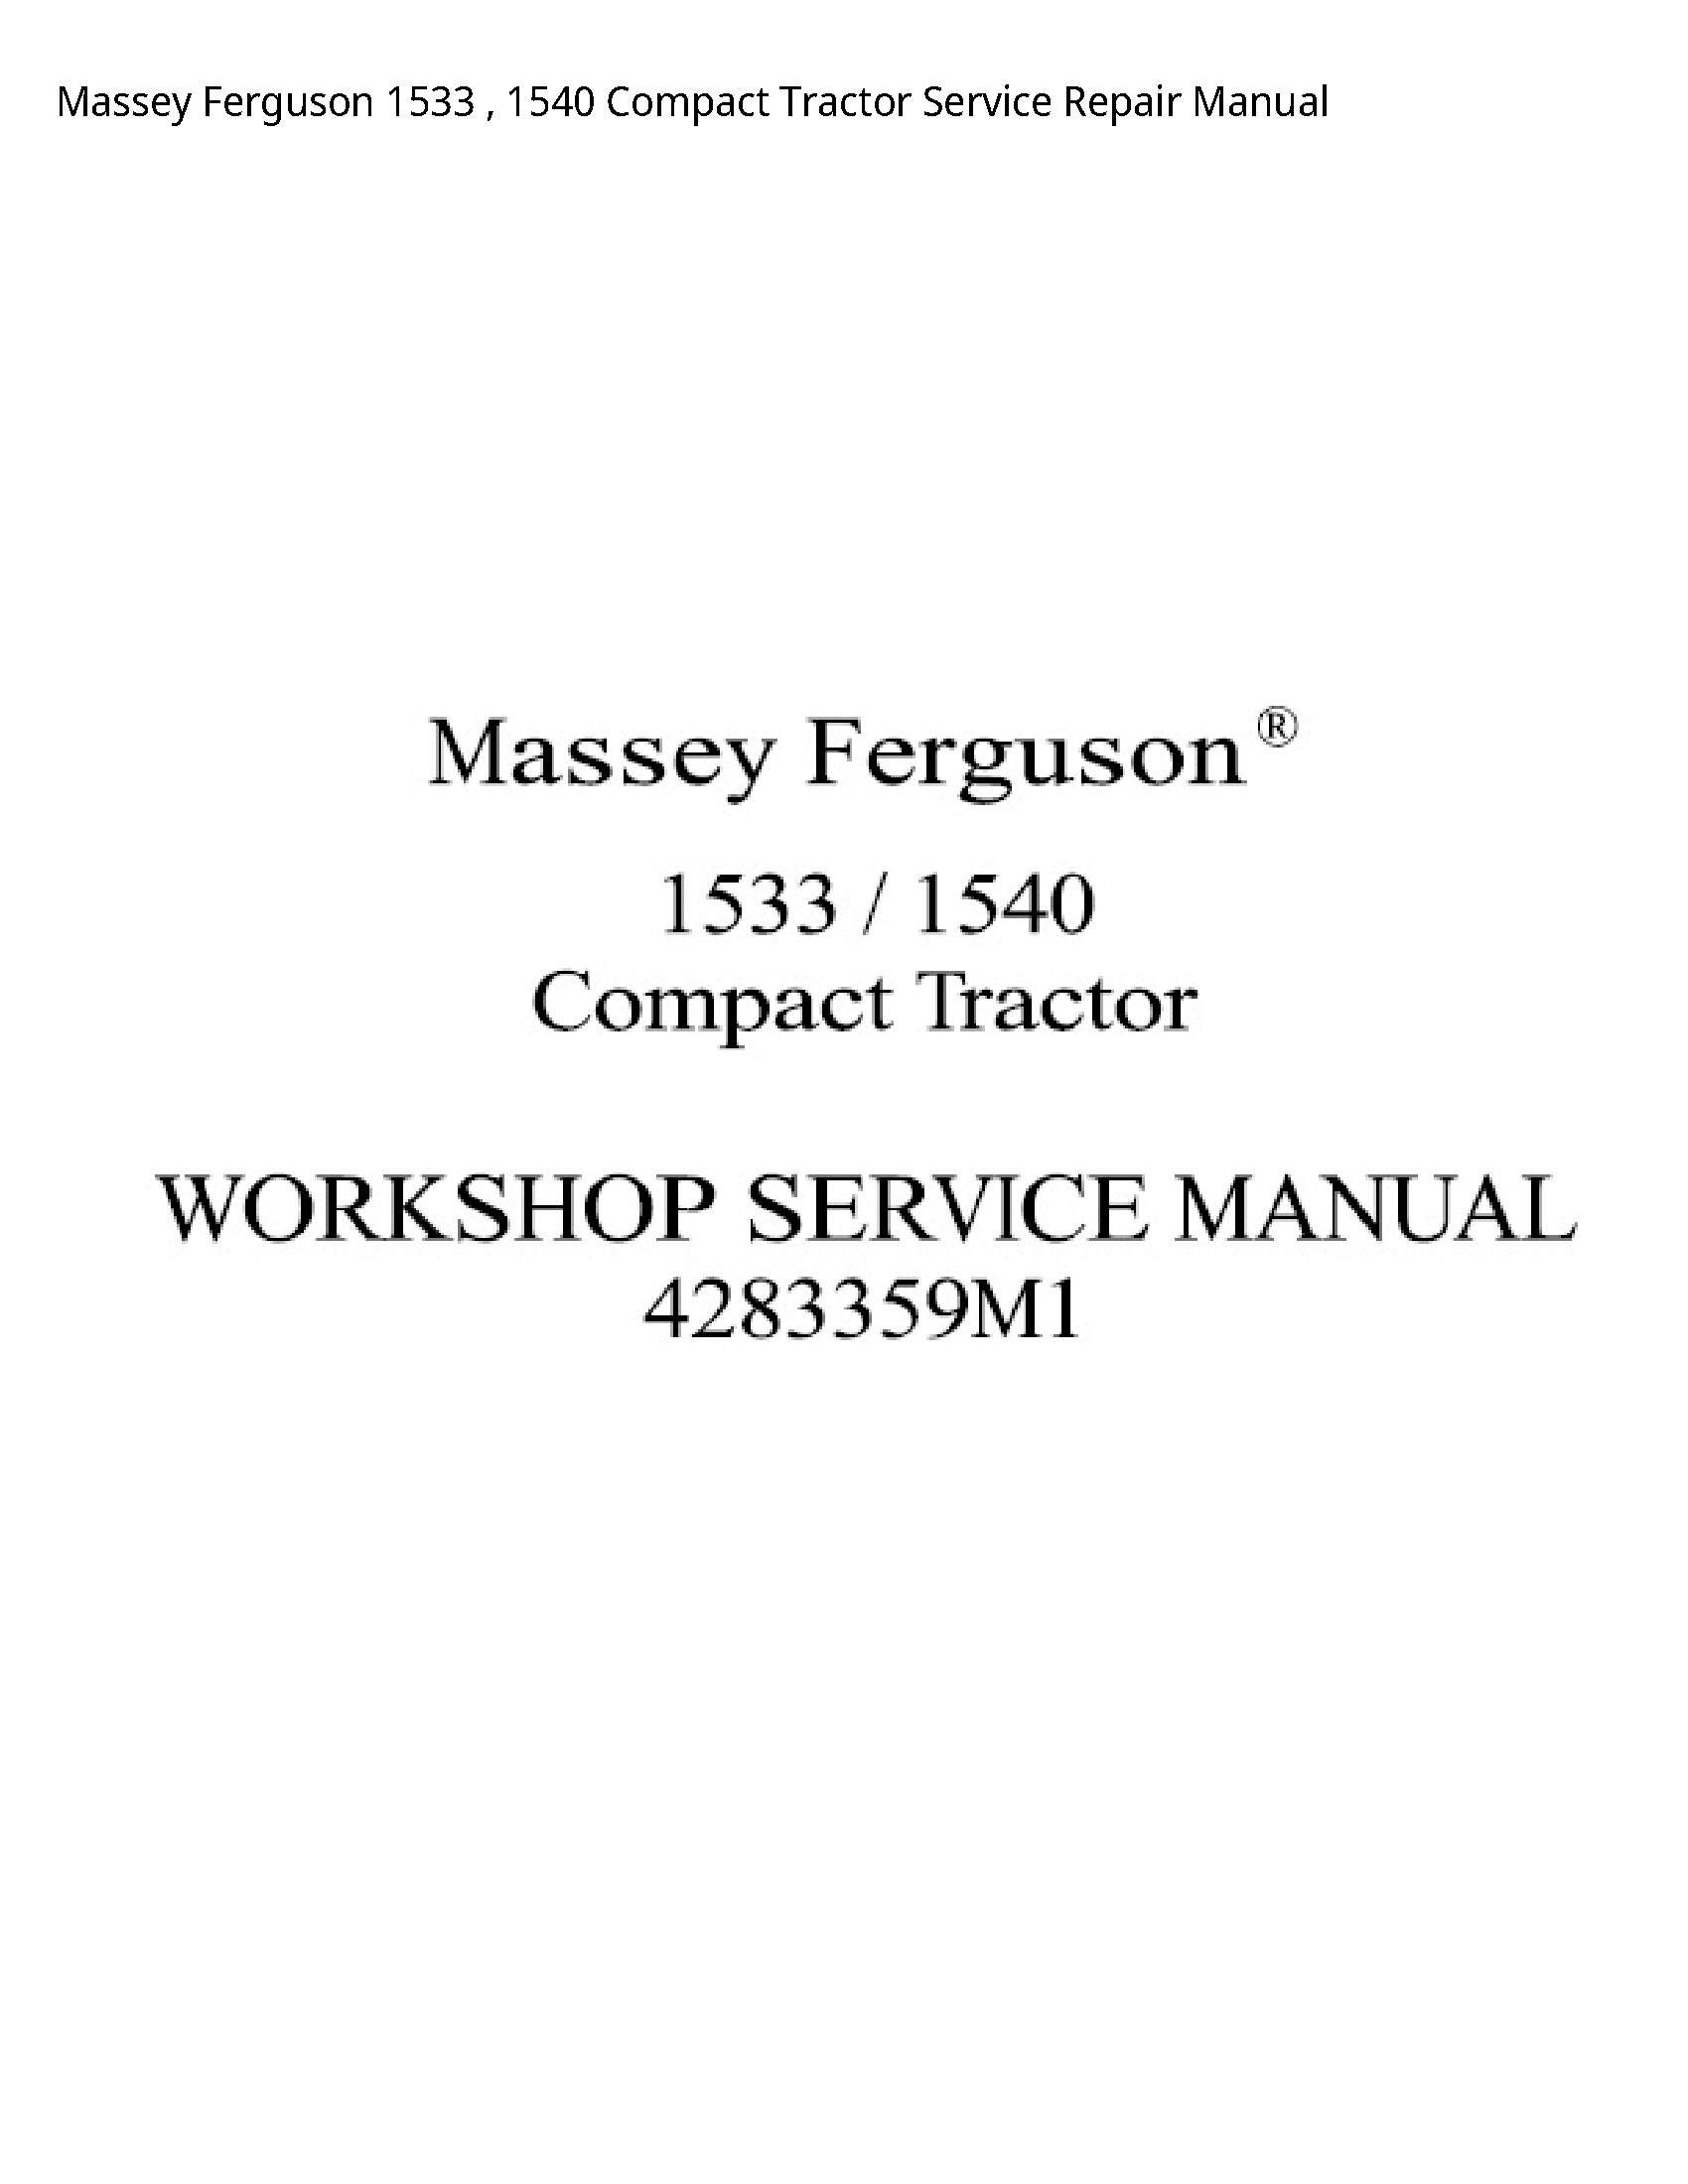 Massey Ferguson 1533 Compact Tractor manual